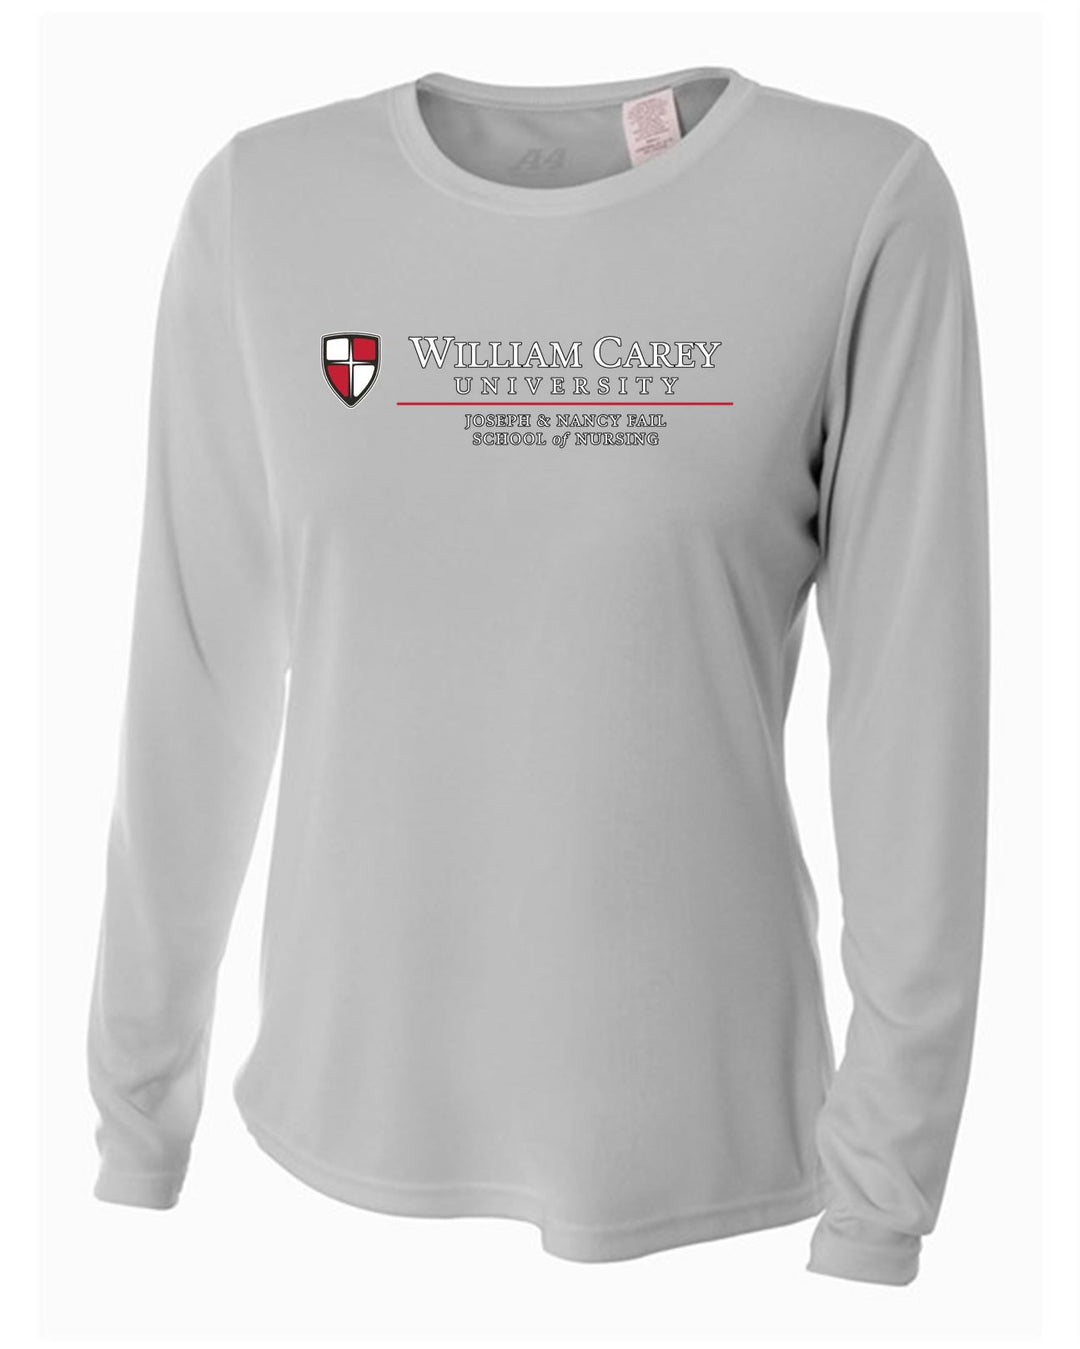 WCU School Of Nursing Men's Long-Sleeve Performance Shirt WCU Nursing   - Third Coast Soccer